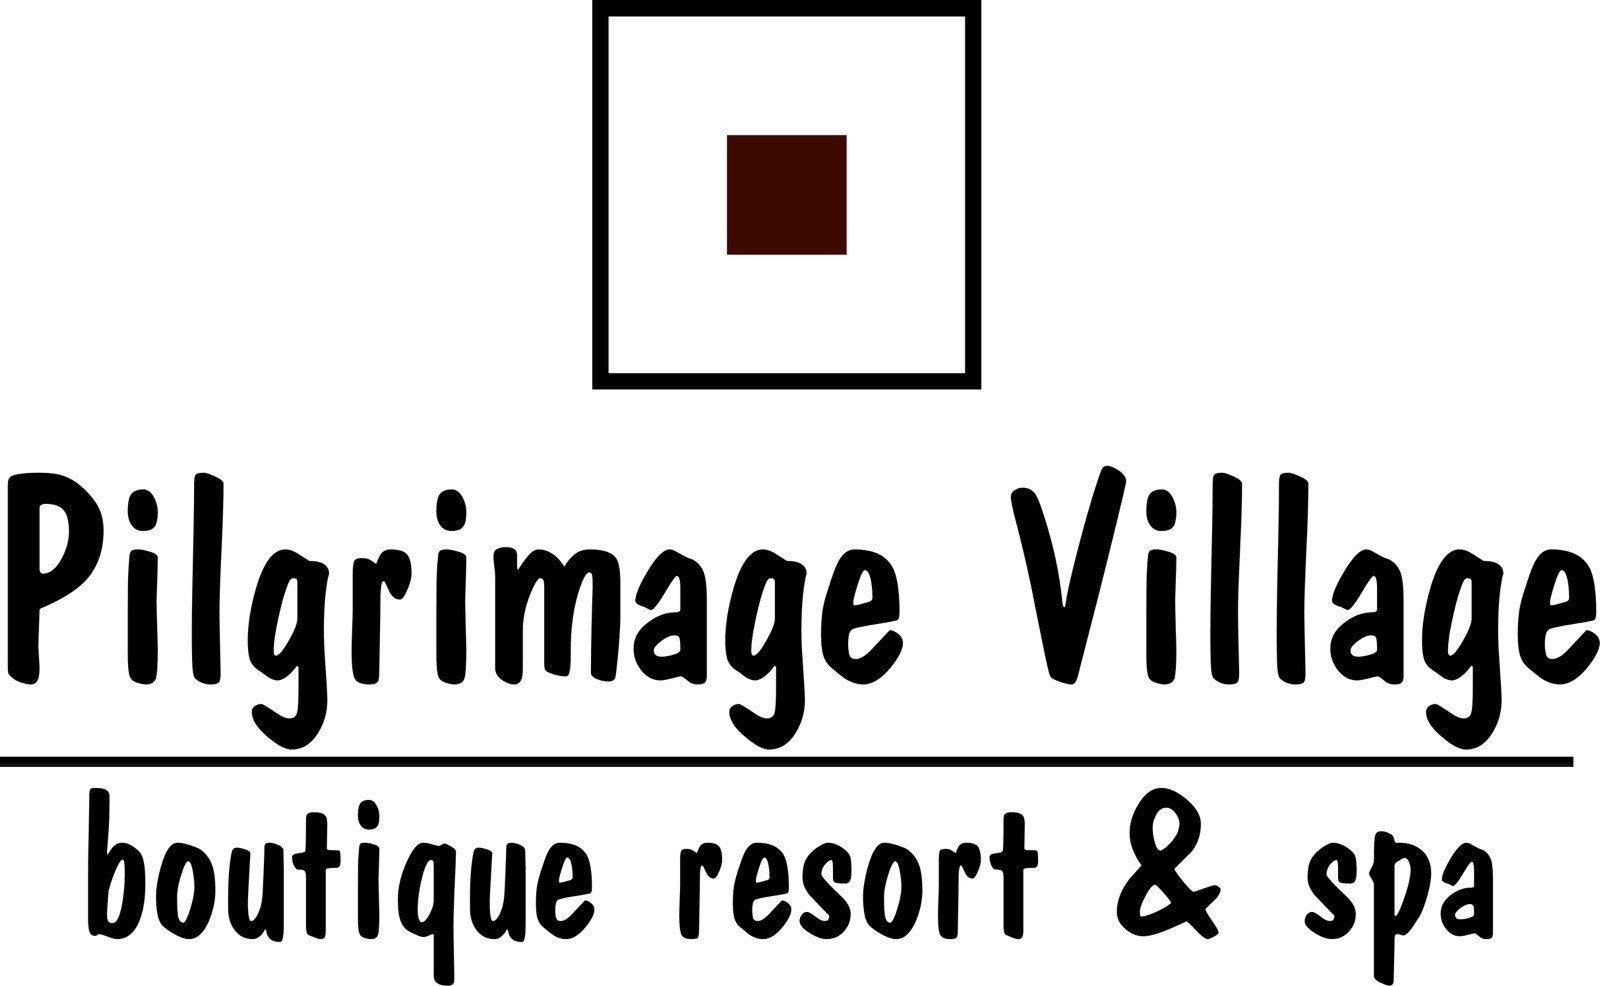 PILGRIMAGE VILLAGE HUẾ BOUTIQUE RESORT & SPA